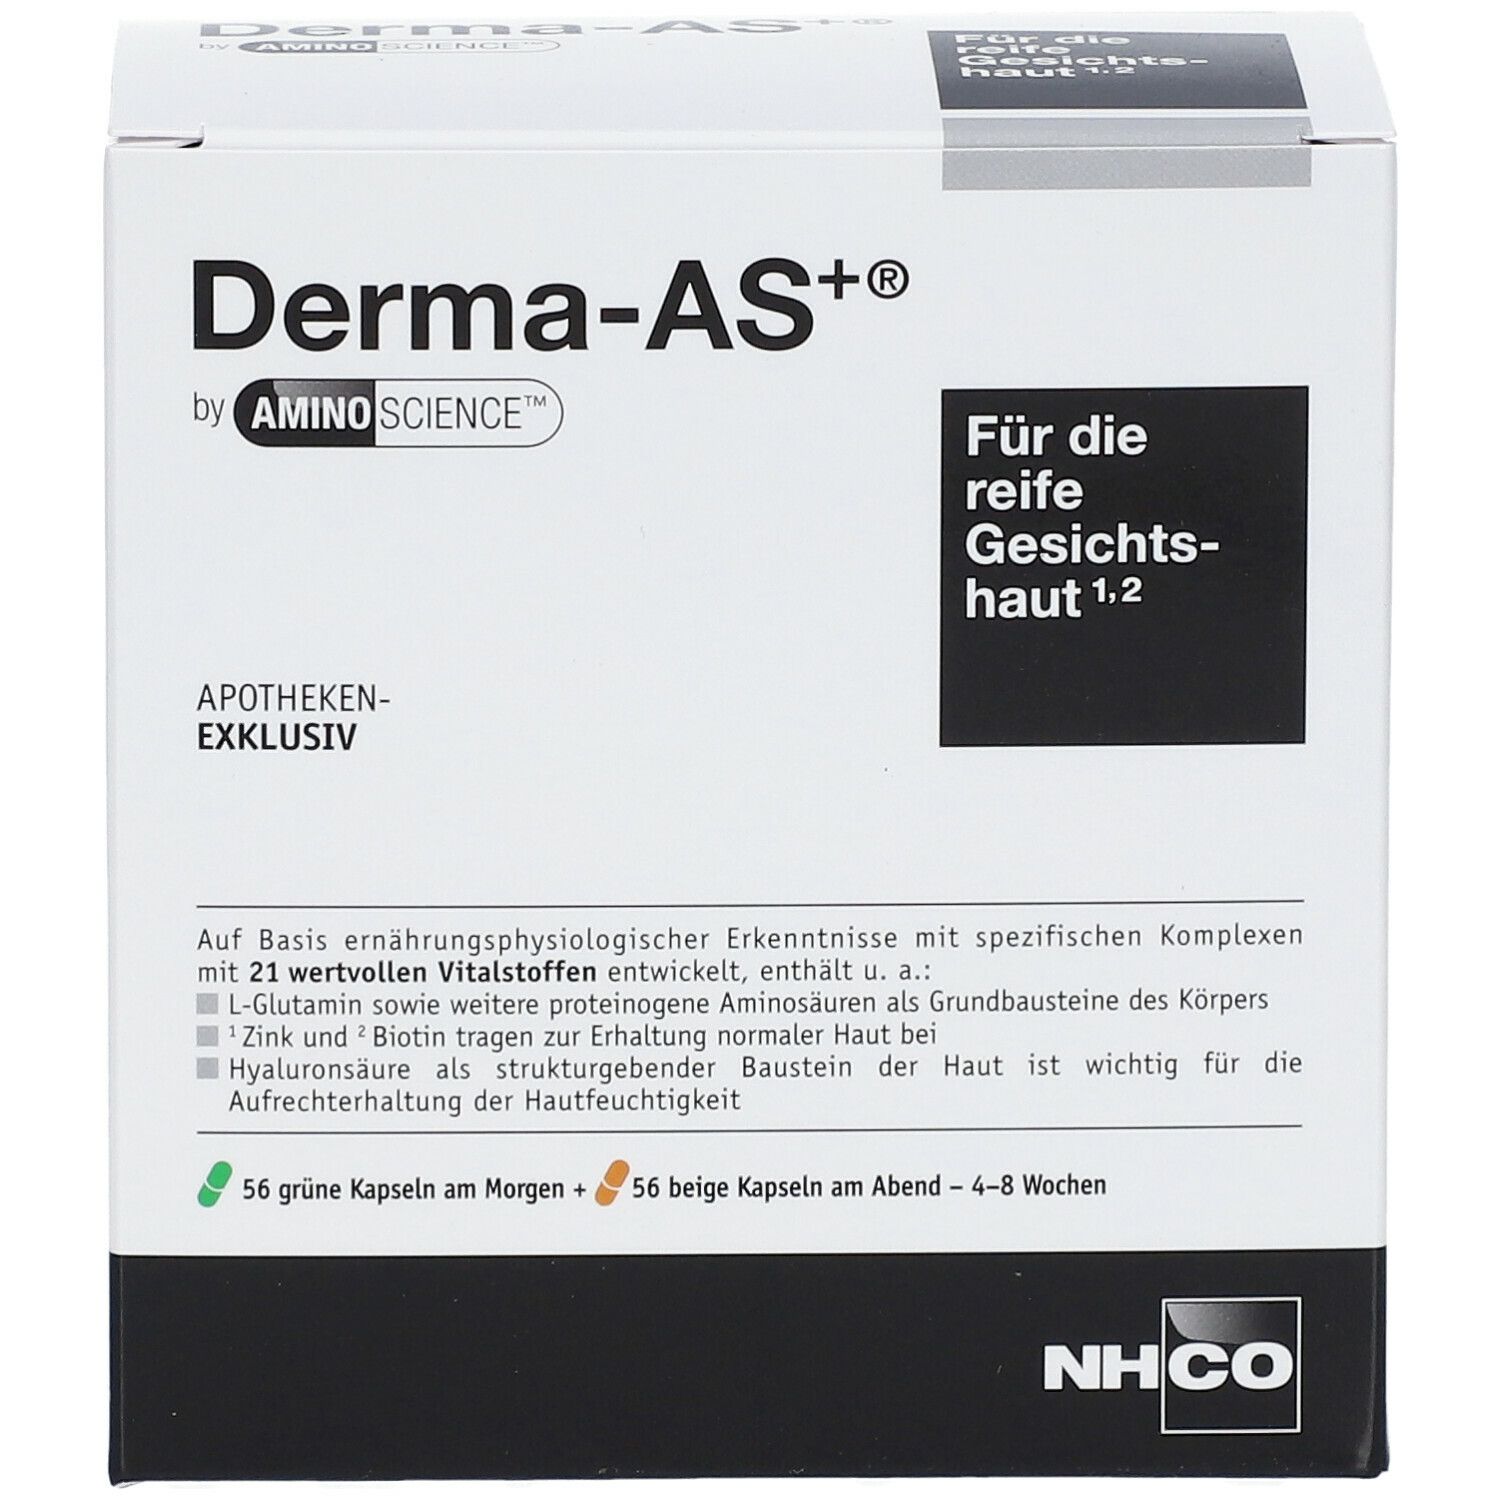 Derma-AS+ by Aminoscience® NHCO